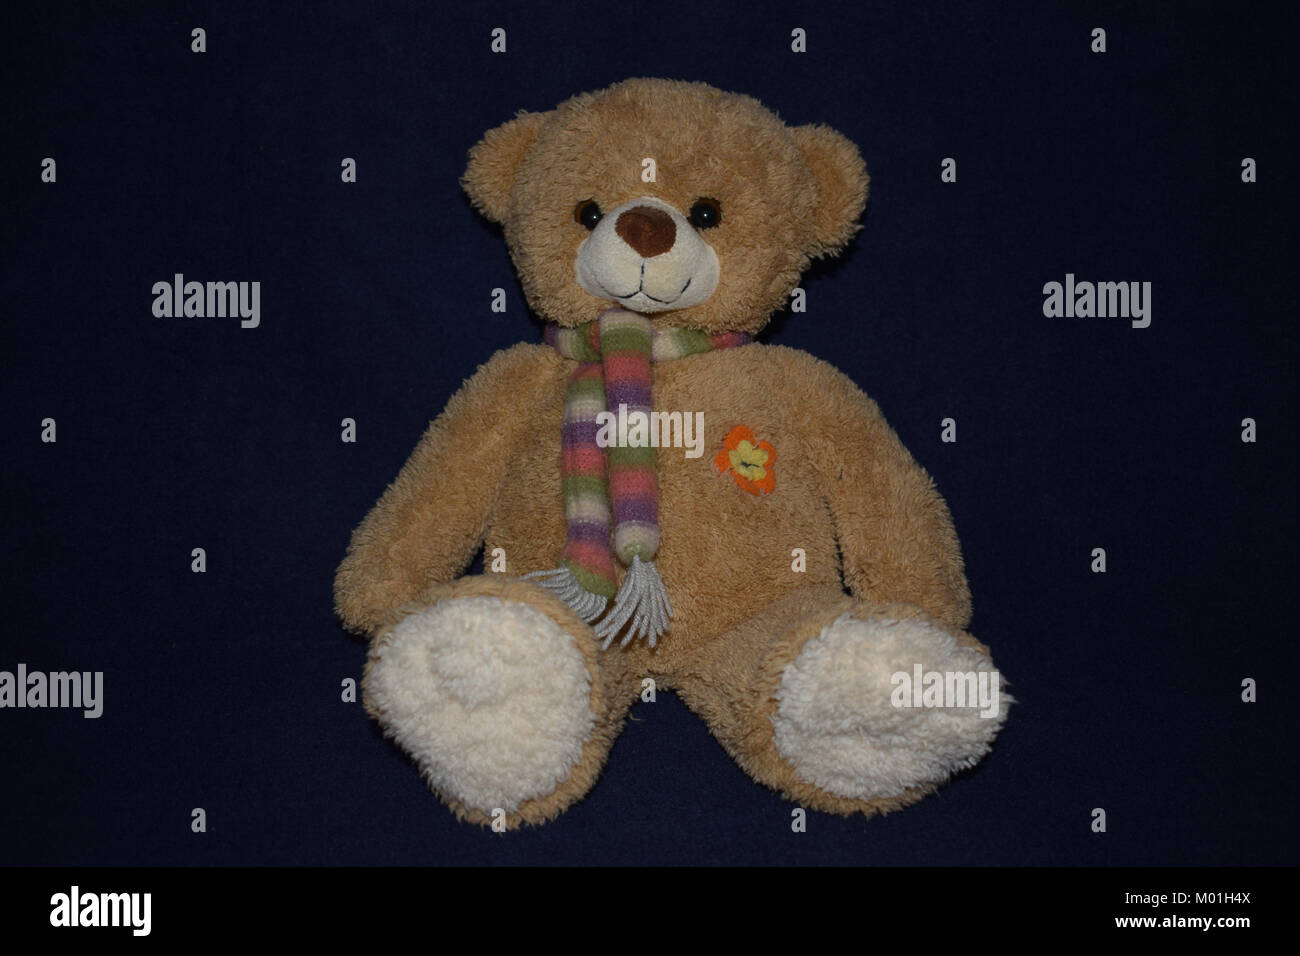 Stuffed animal teddybear Stock Photo